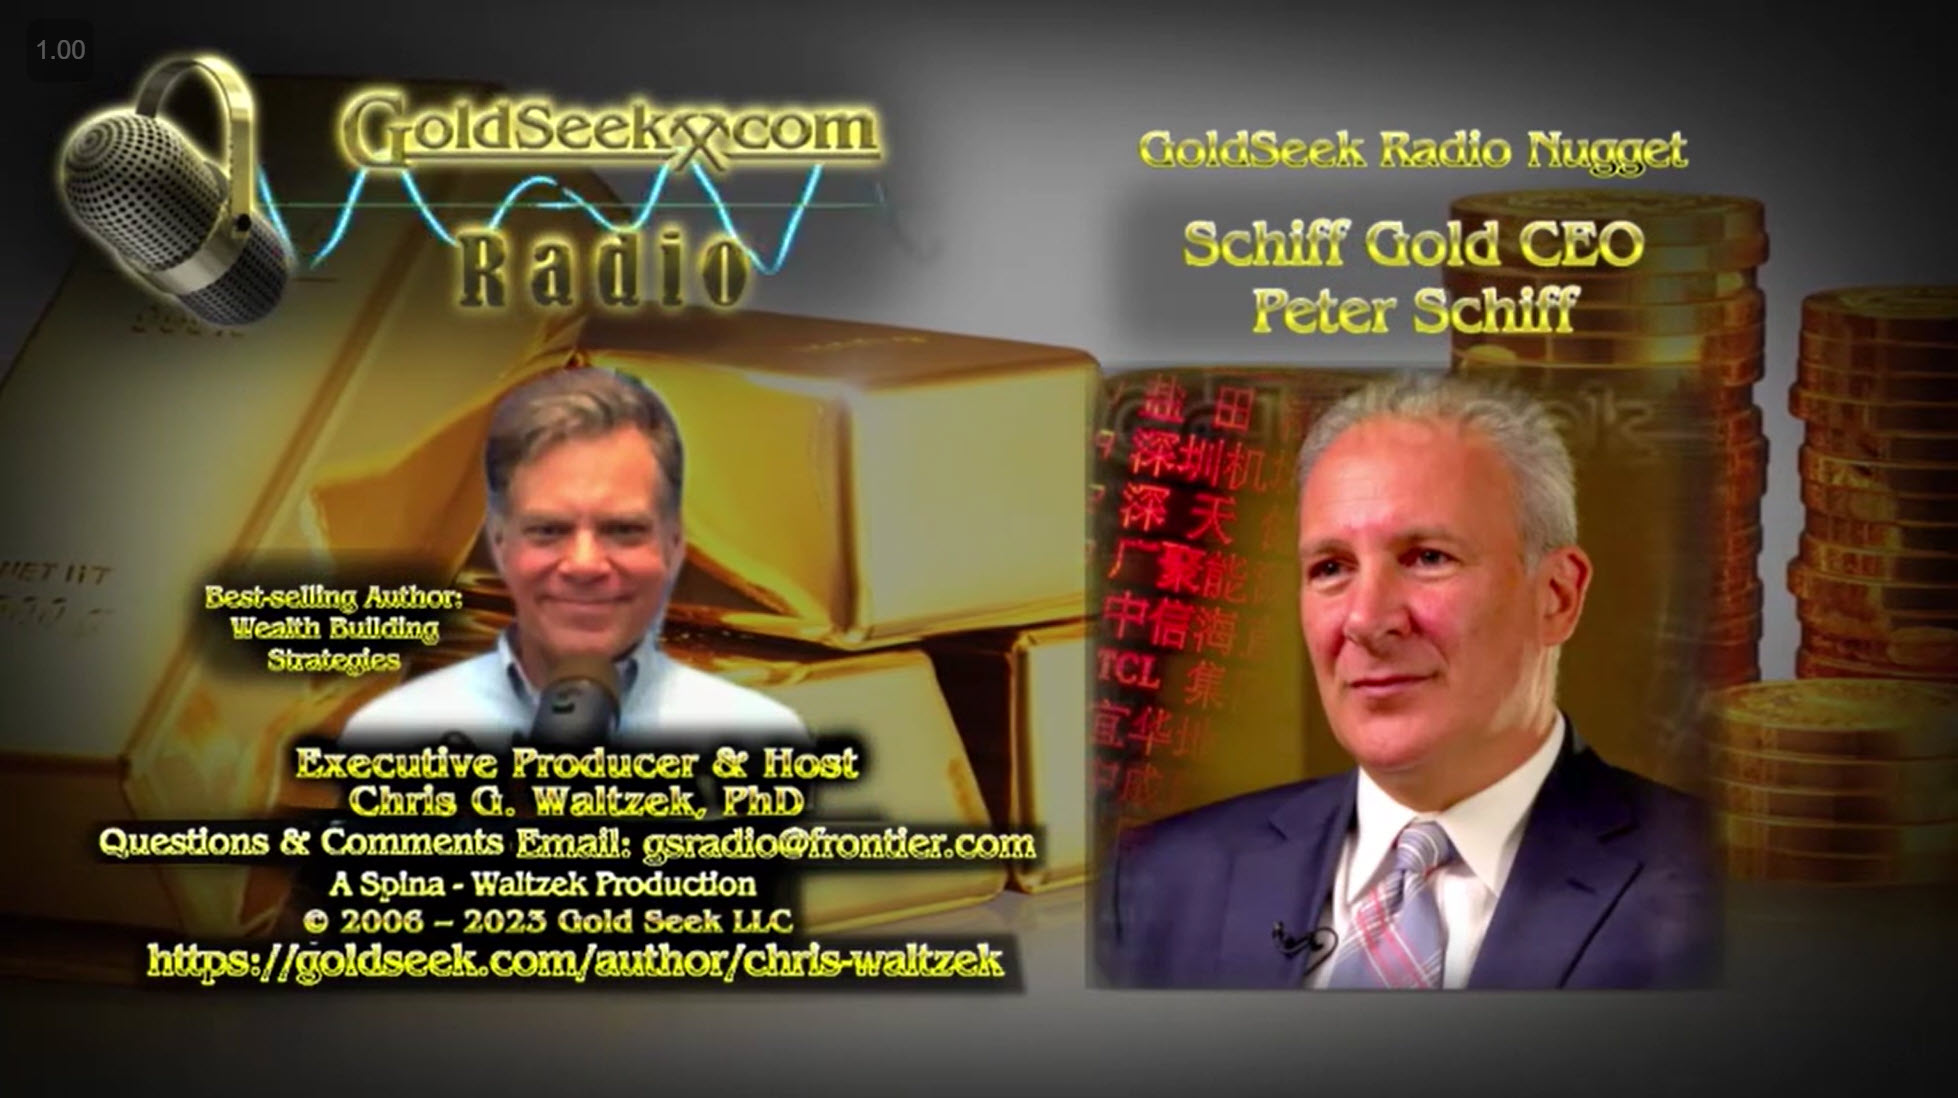 GoldSeek Radio Nugget - Peter Schiff: Gold $20,000 to $30,000 Minimum ...